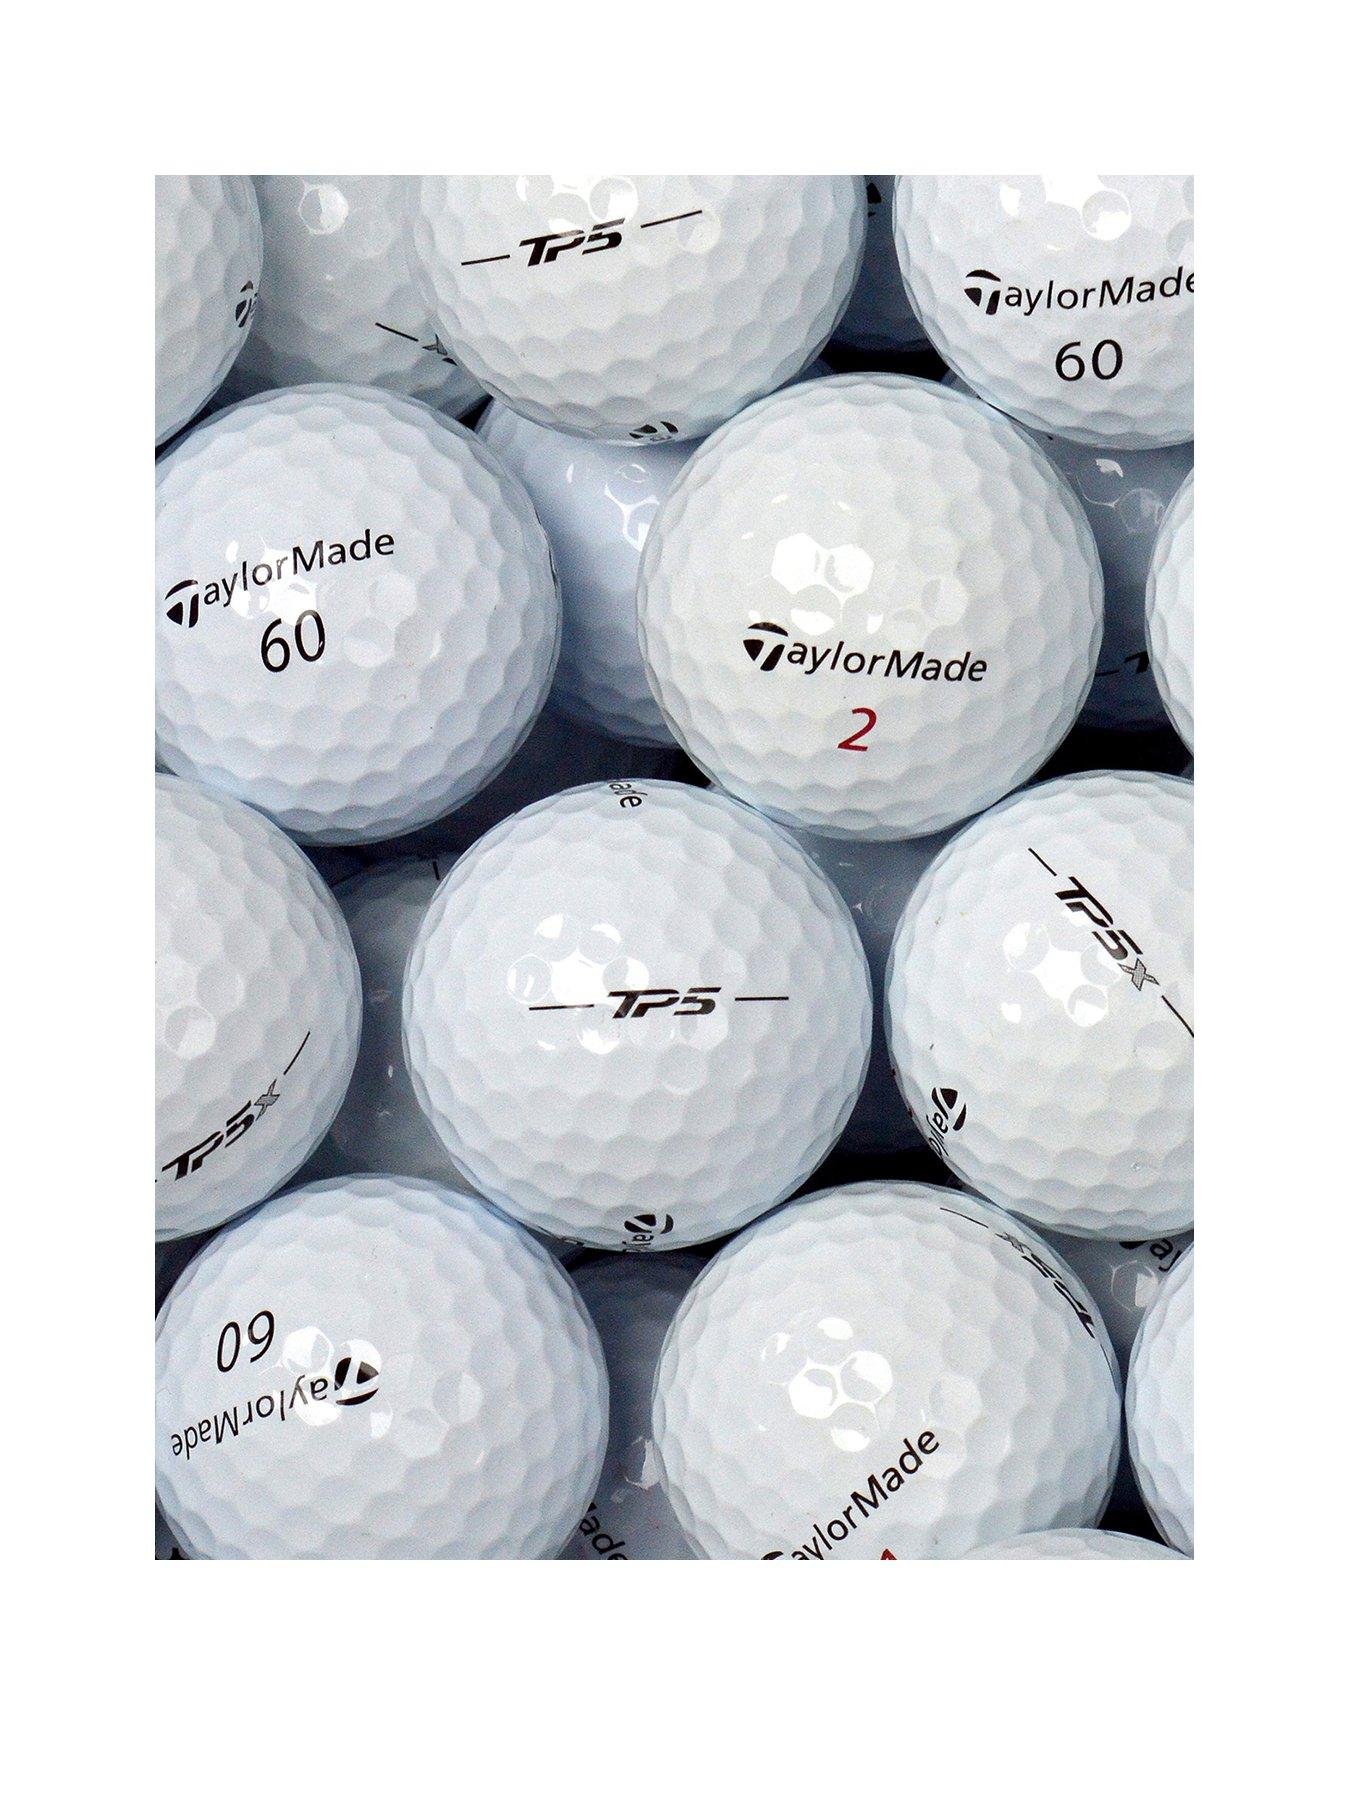 Golf balls | Golf equipment | Sports & leisure 